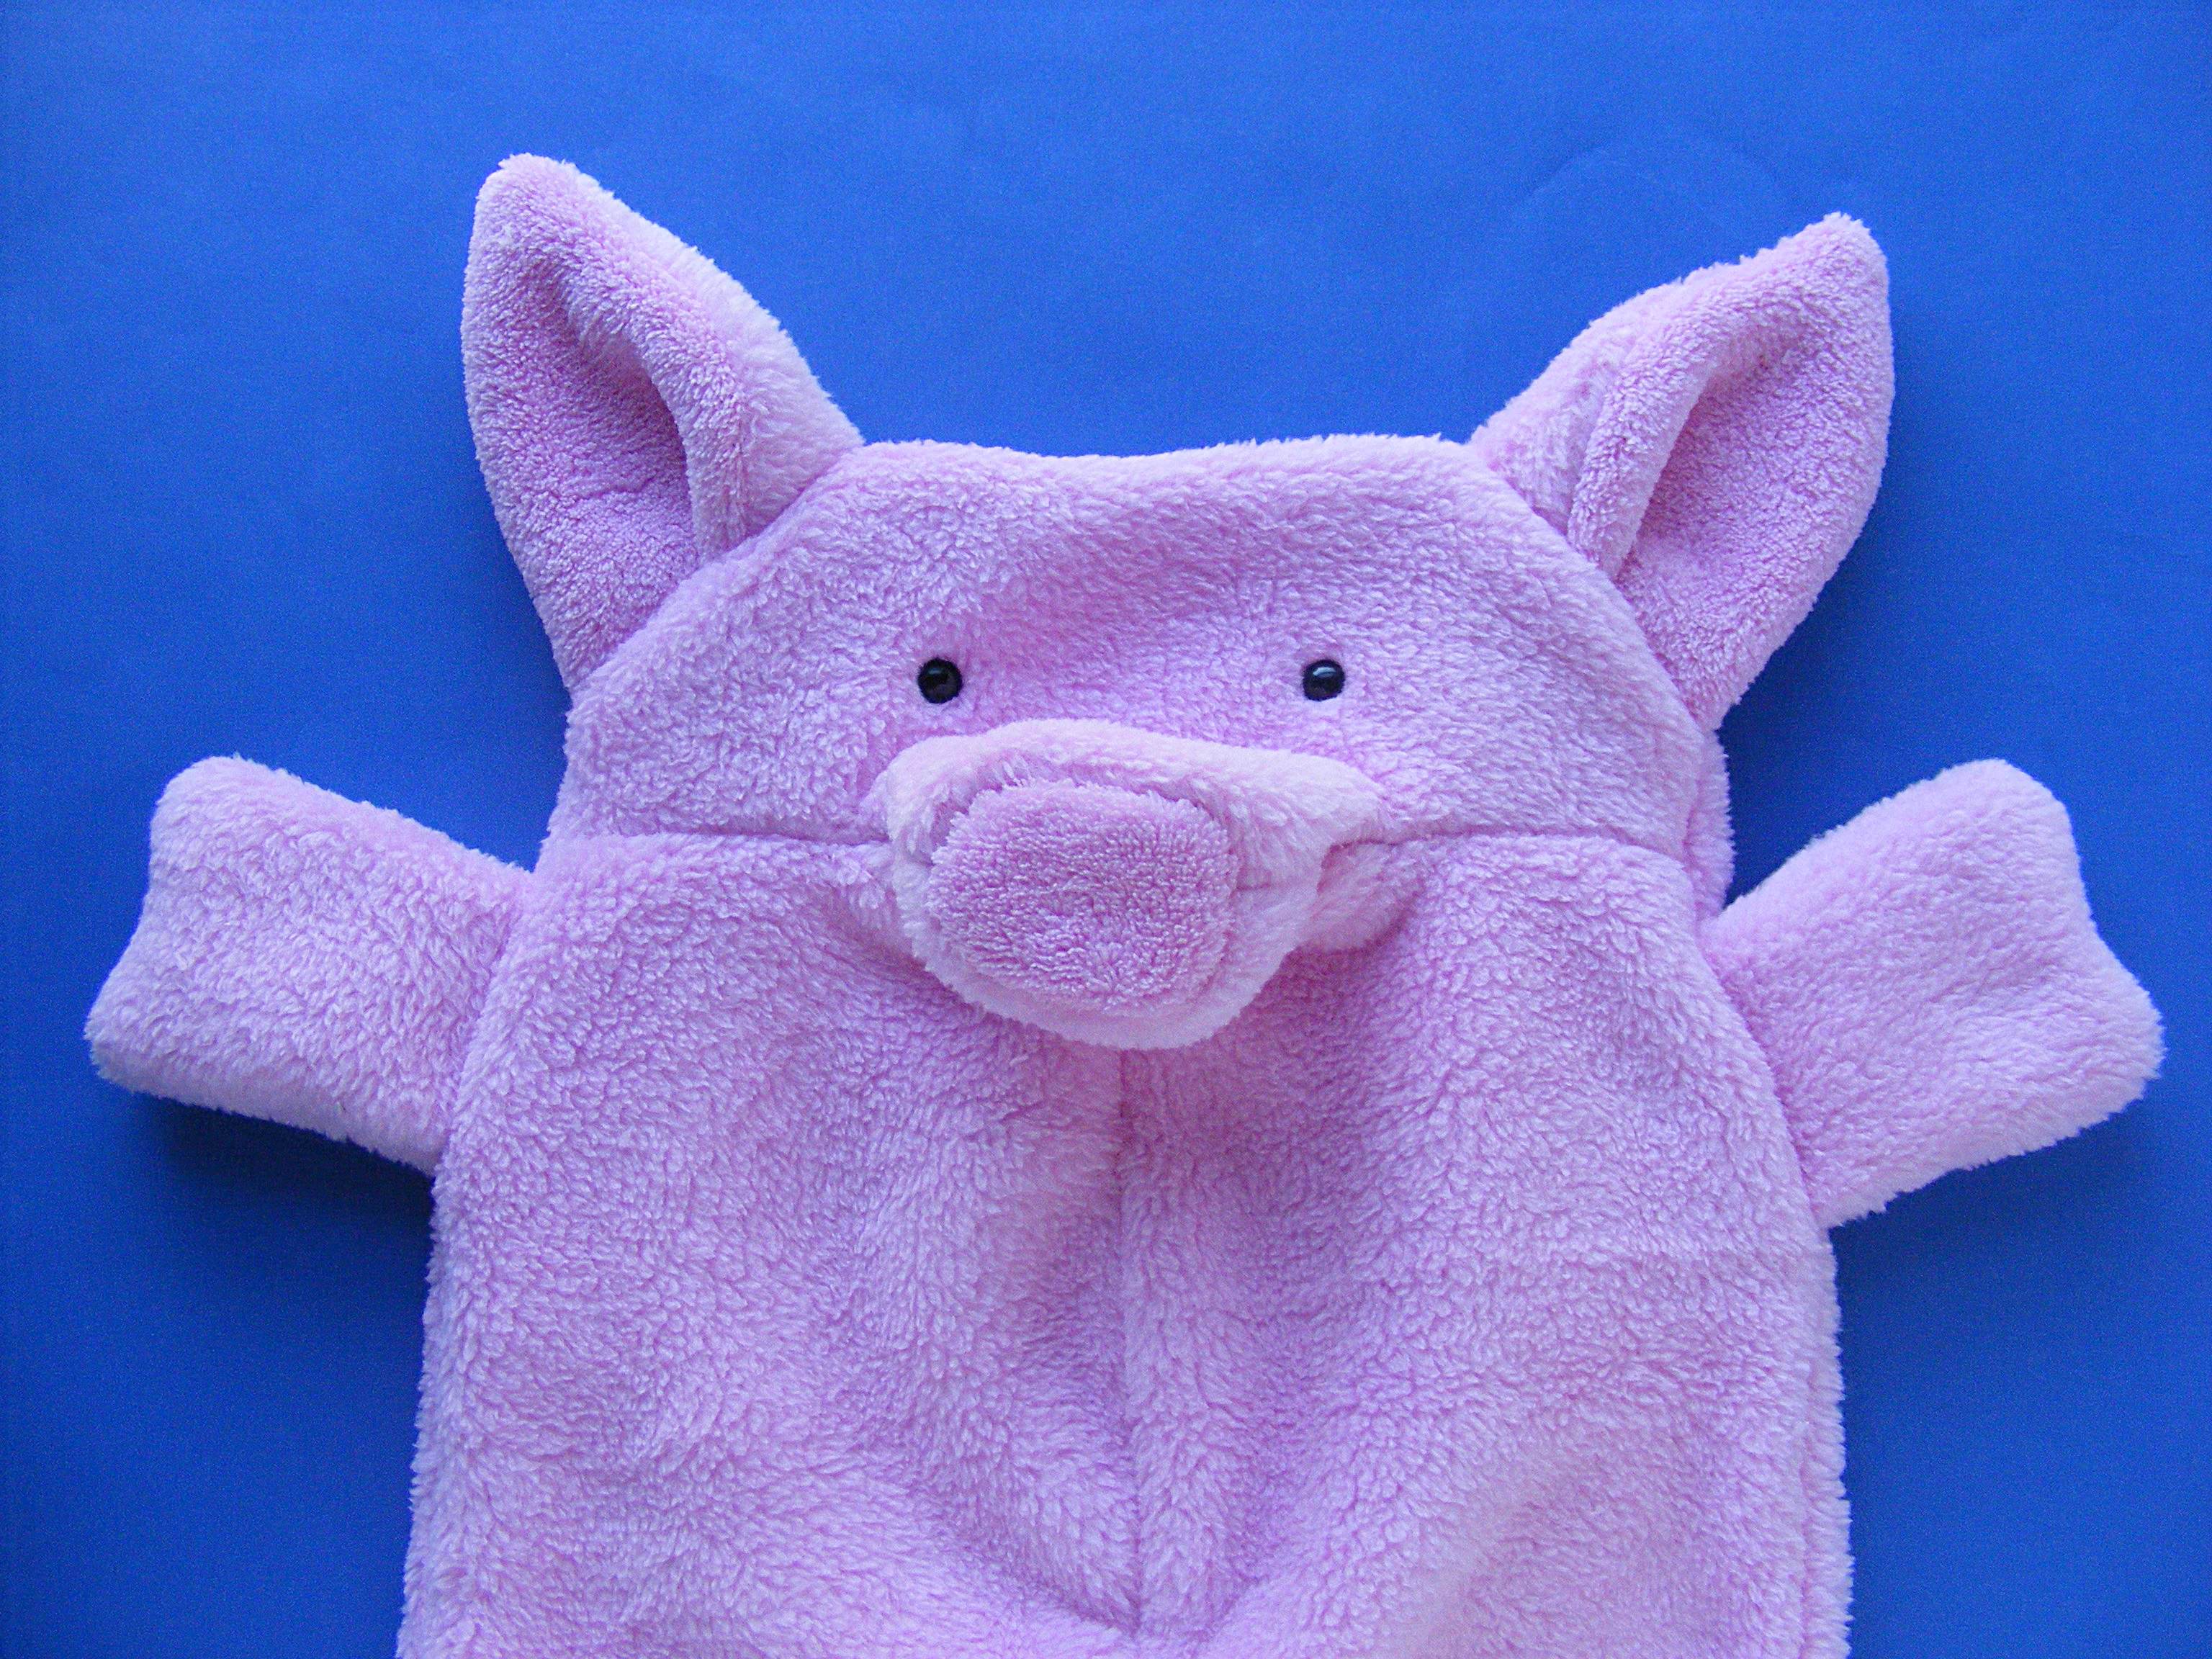 Nellie - a pig stuffed animal pattern